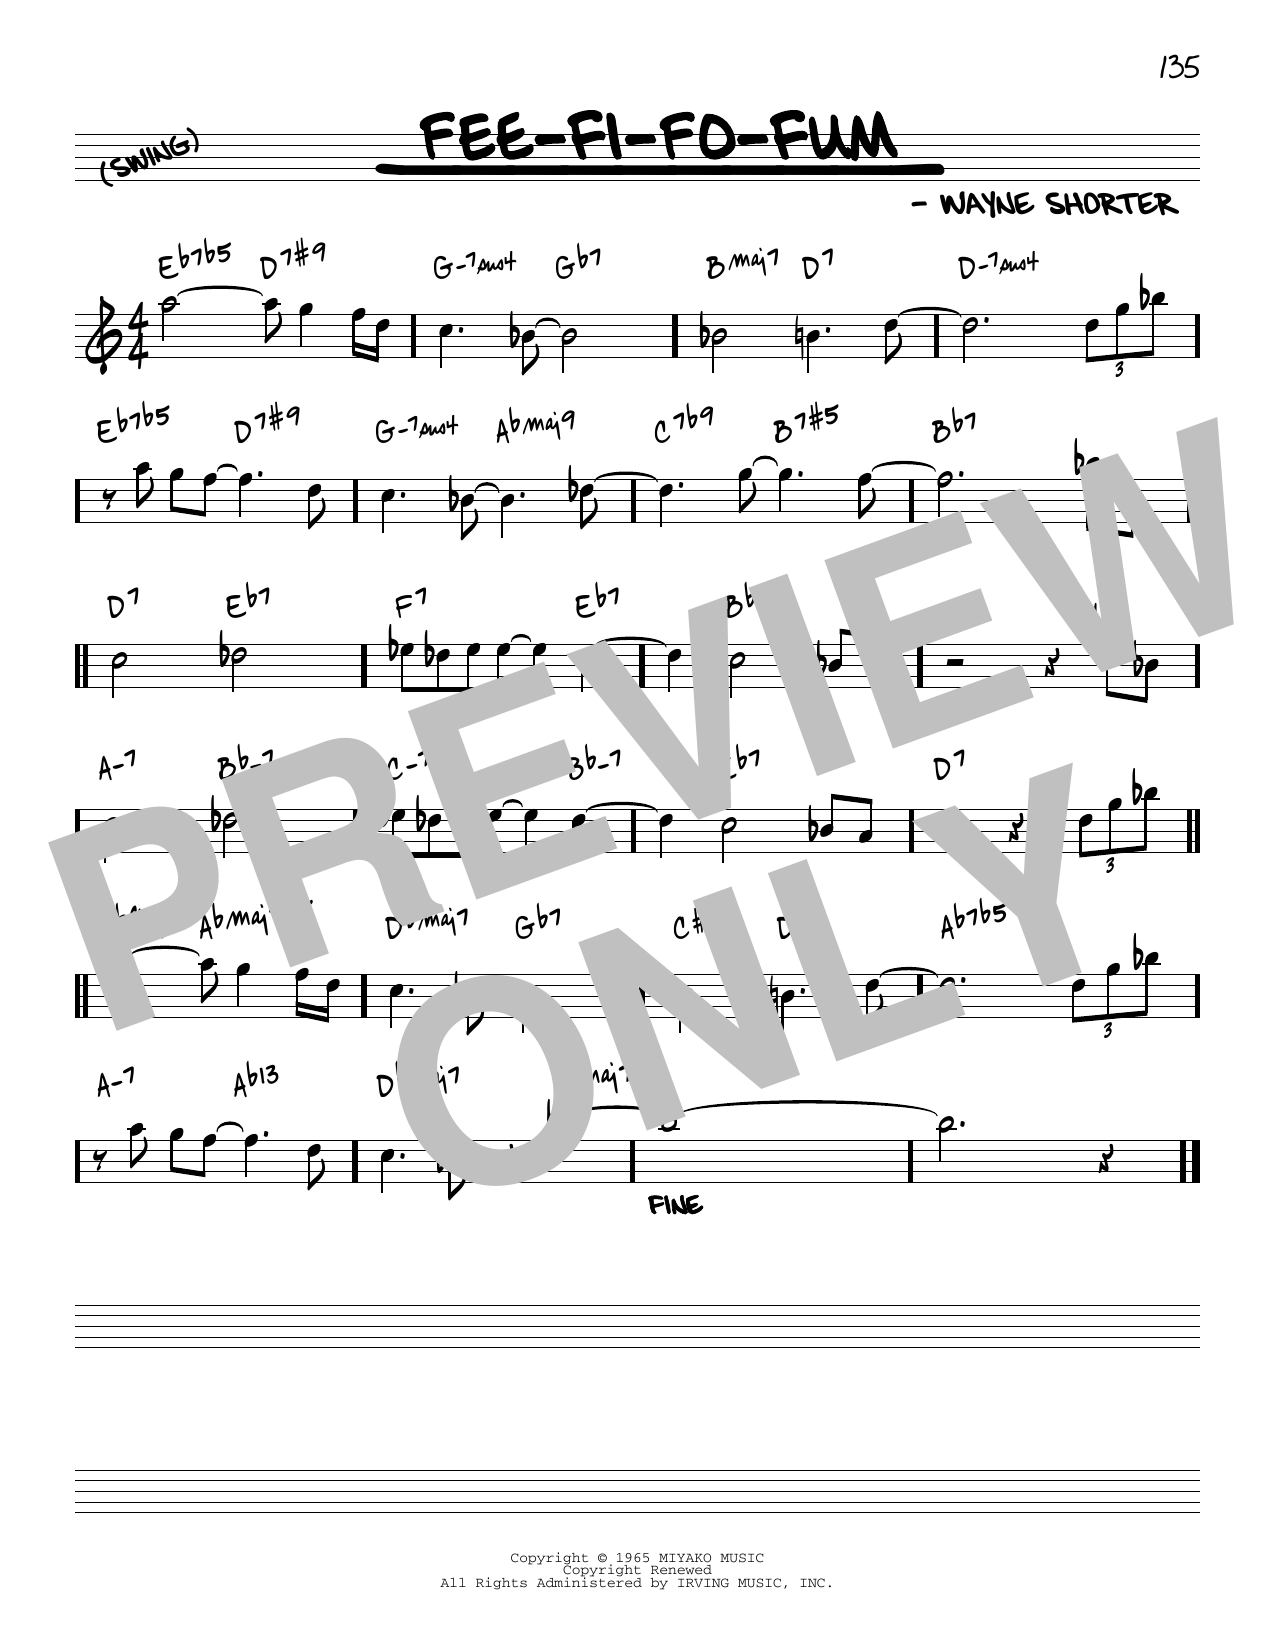 Download Wayne Shorter Fee-Fi-Fo-Fum [Reharmonized version] (a Sheet Music